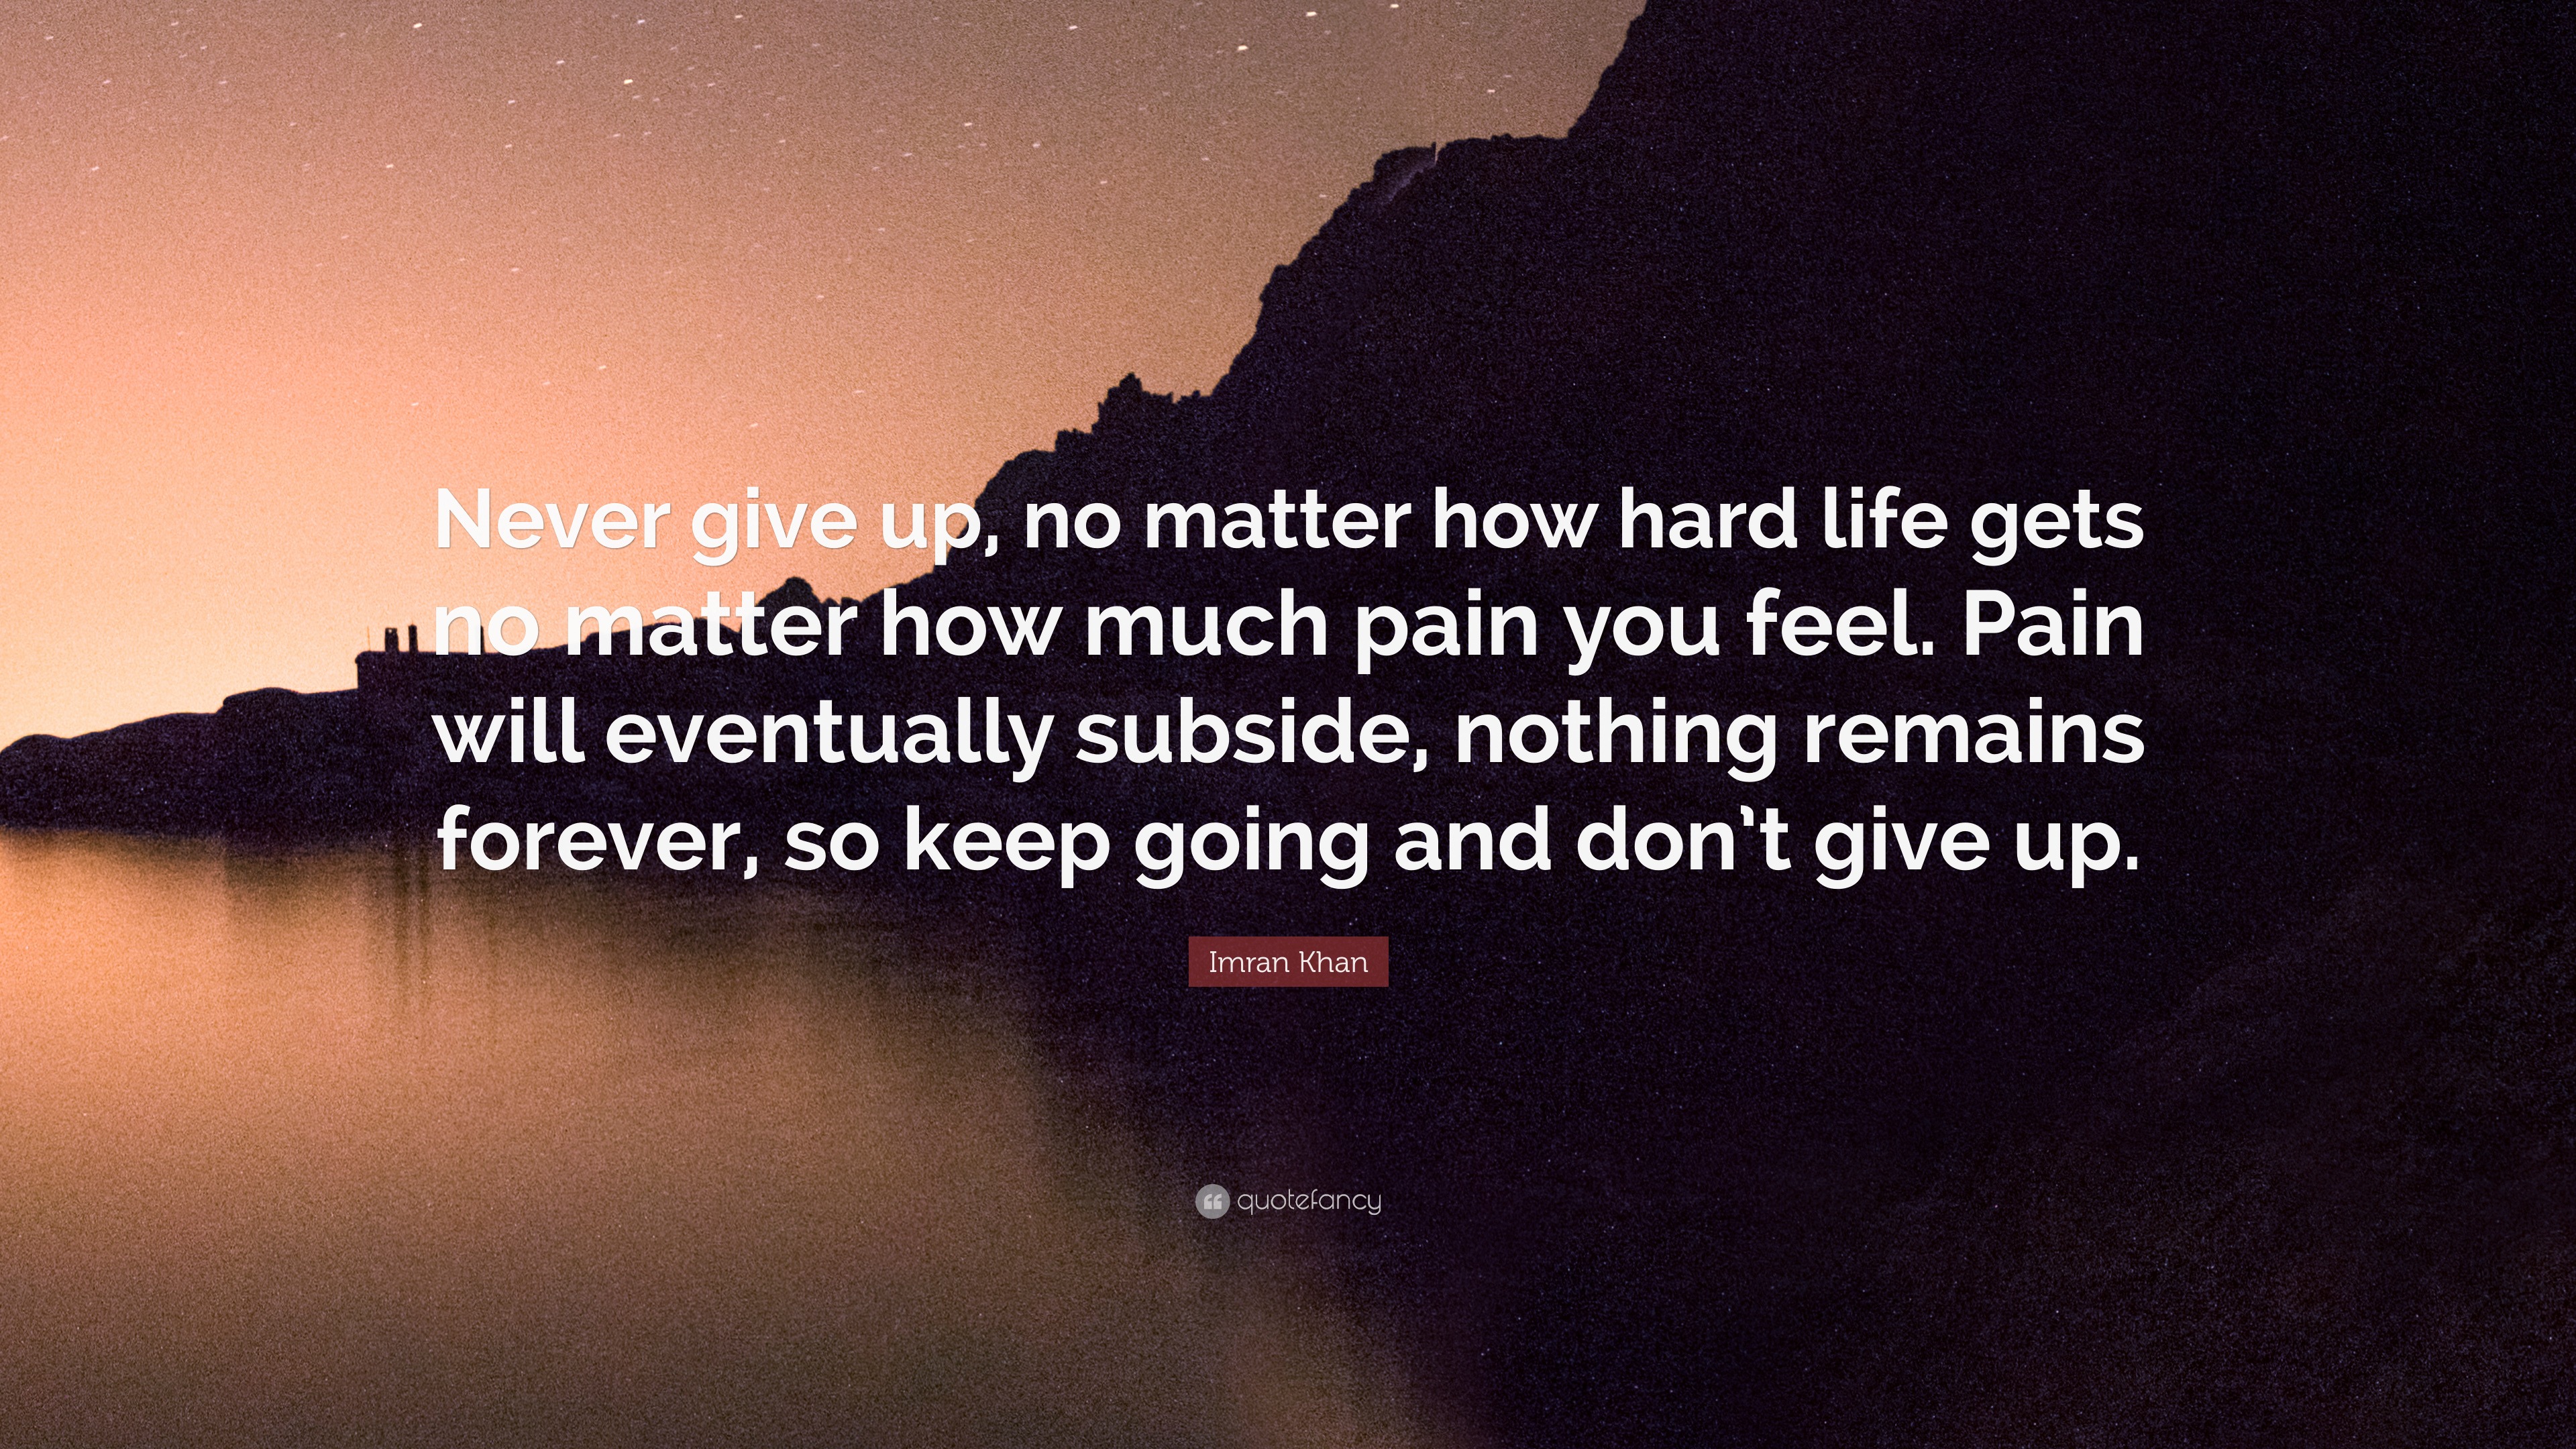 Imran Khan Quote “Never give up no matter how hard life s no